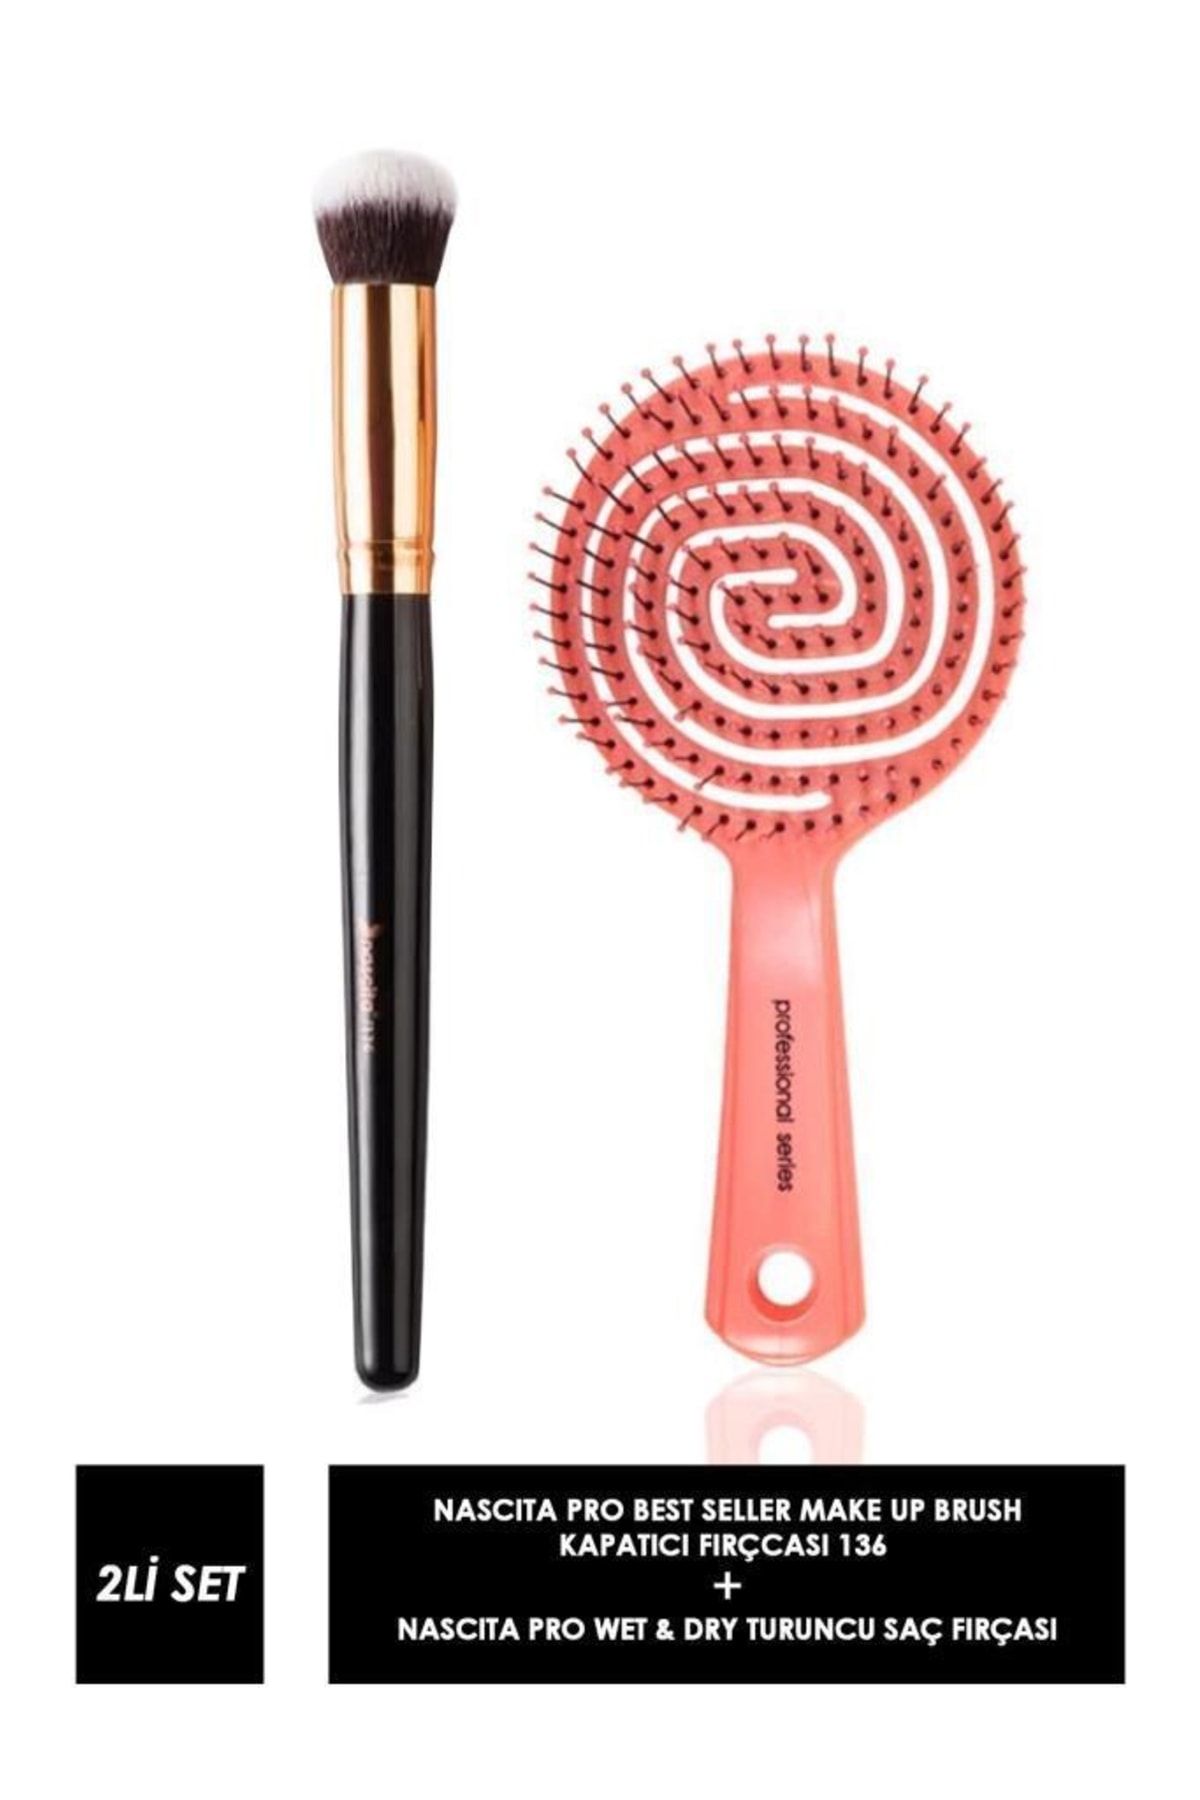 Nascita Pro Best Seller Make Up Brush 136 Kapatıcı Fırçcası + Pro Wet & Dry Turuncu Saç Fırç